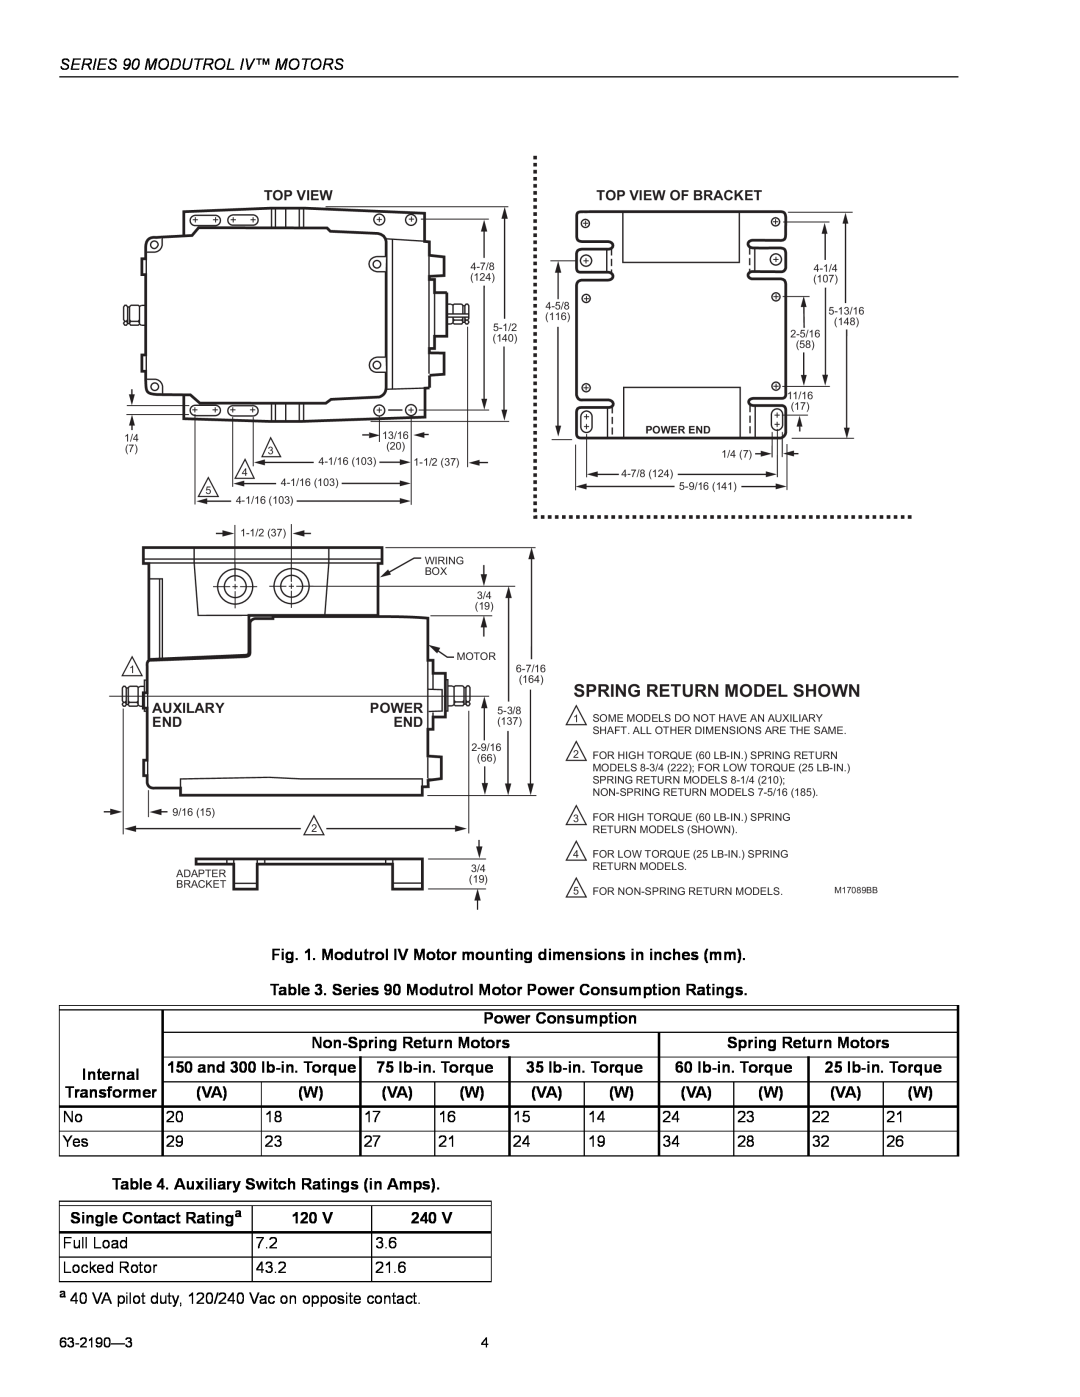 Honeywell Modutrol IV Motor mounting dimensions in inches mm, Series 90 Modutrol Motor Power Consumption Ratings, 43.2 